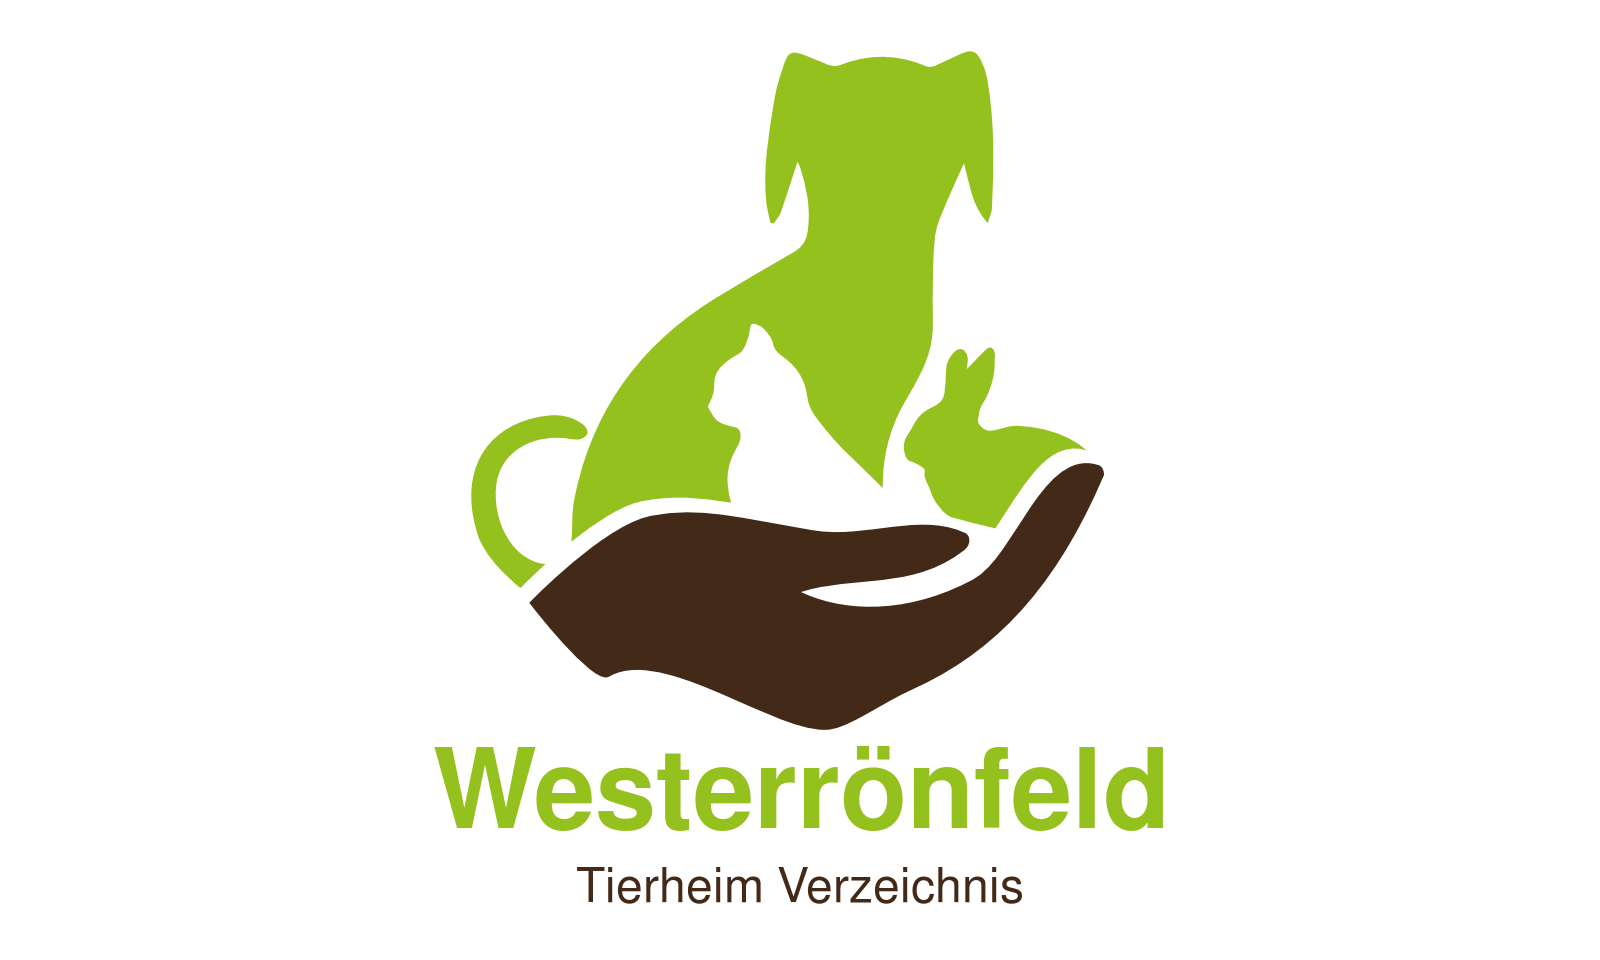 Tierheim Westerrönfeld